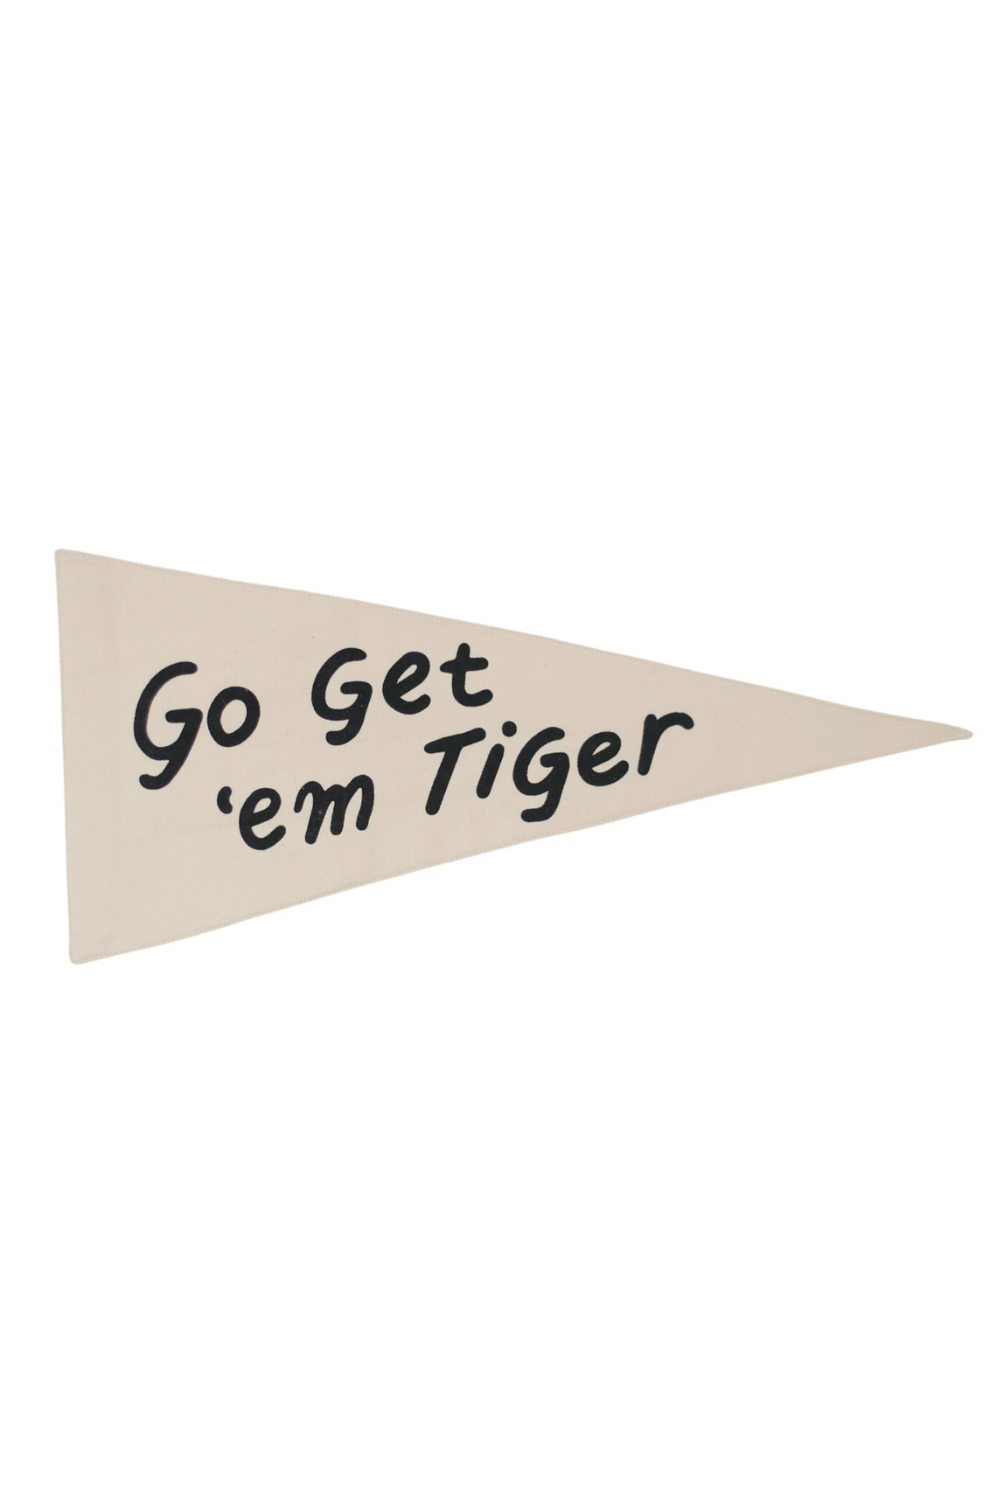 Go Get 'Em Tiger Pennant